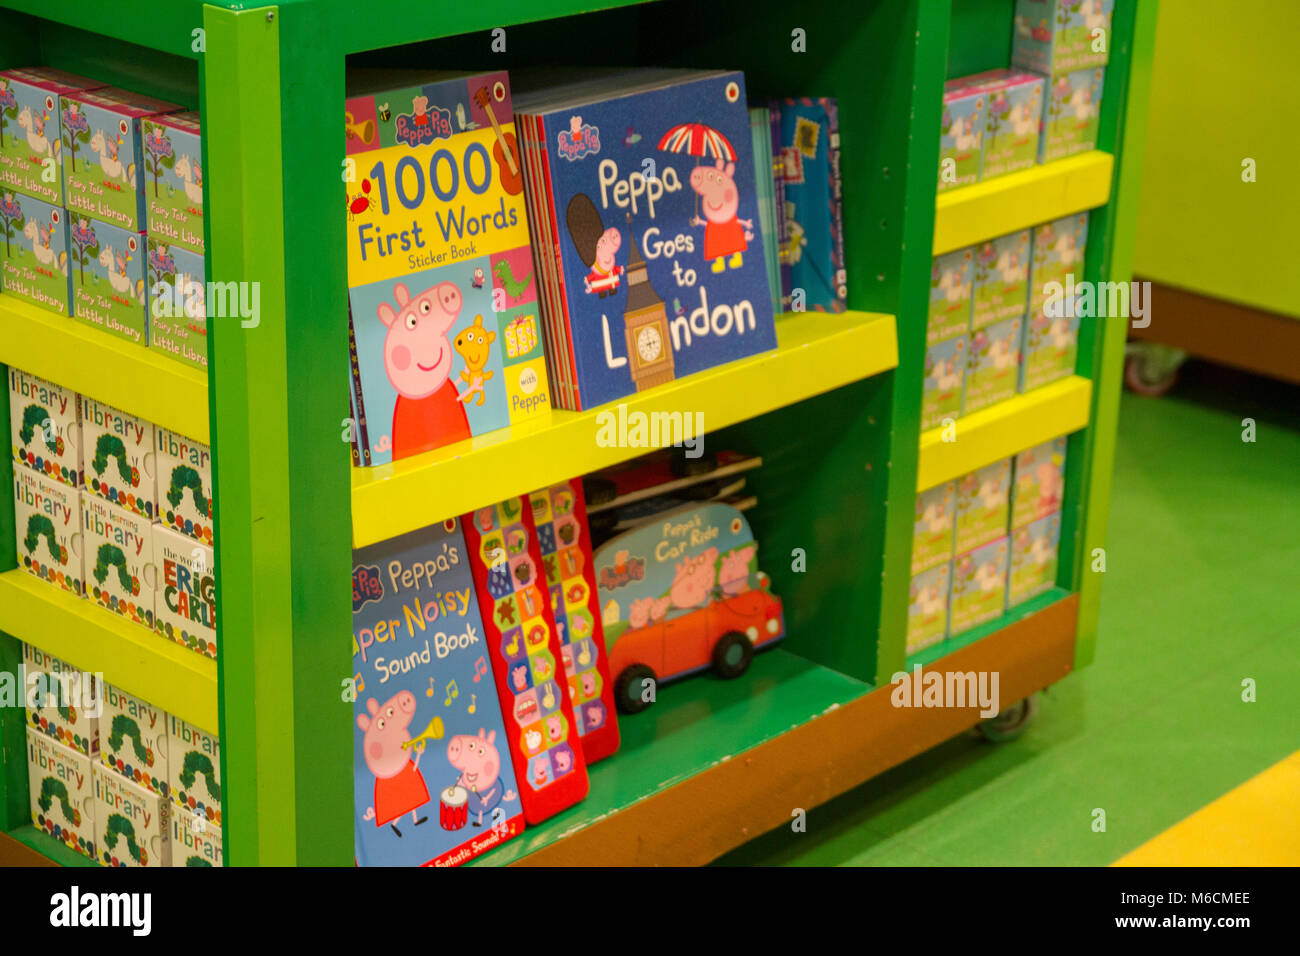 https://c8.alamy.com/compit/m6cmee/libri-per-bambini-libri-per-bambini-kid-child-peppa-pig-libri-sul-display-in-un-bookshop-londra-uk-il-concetto-di-istruzione-m6cmee.jpg